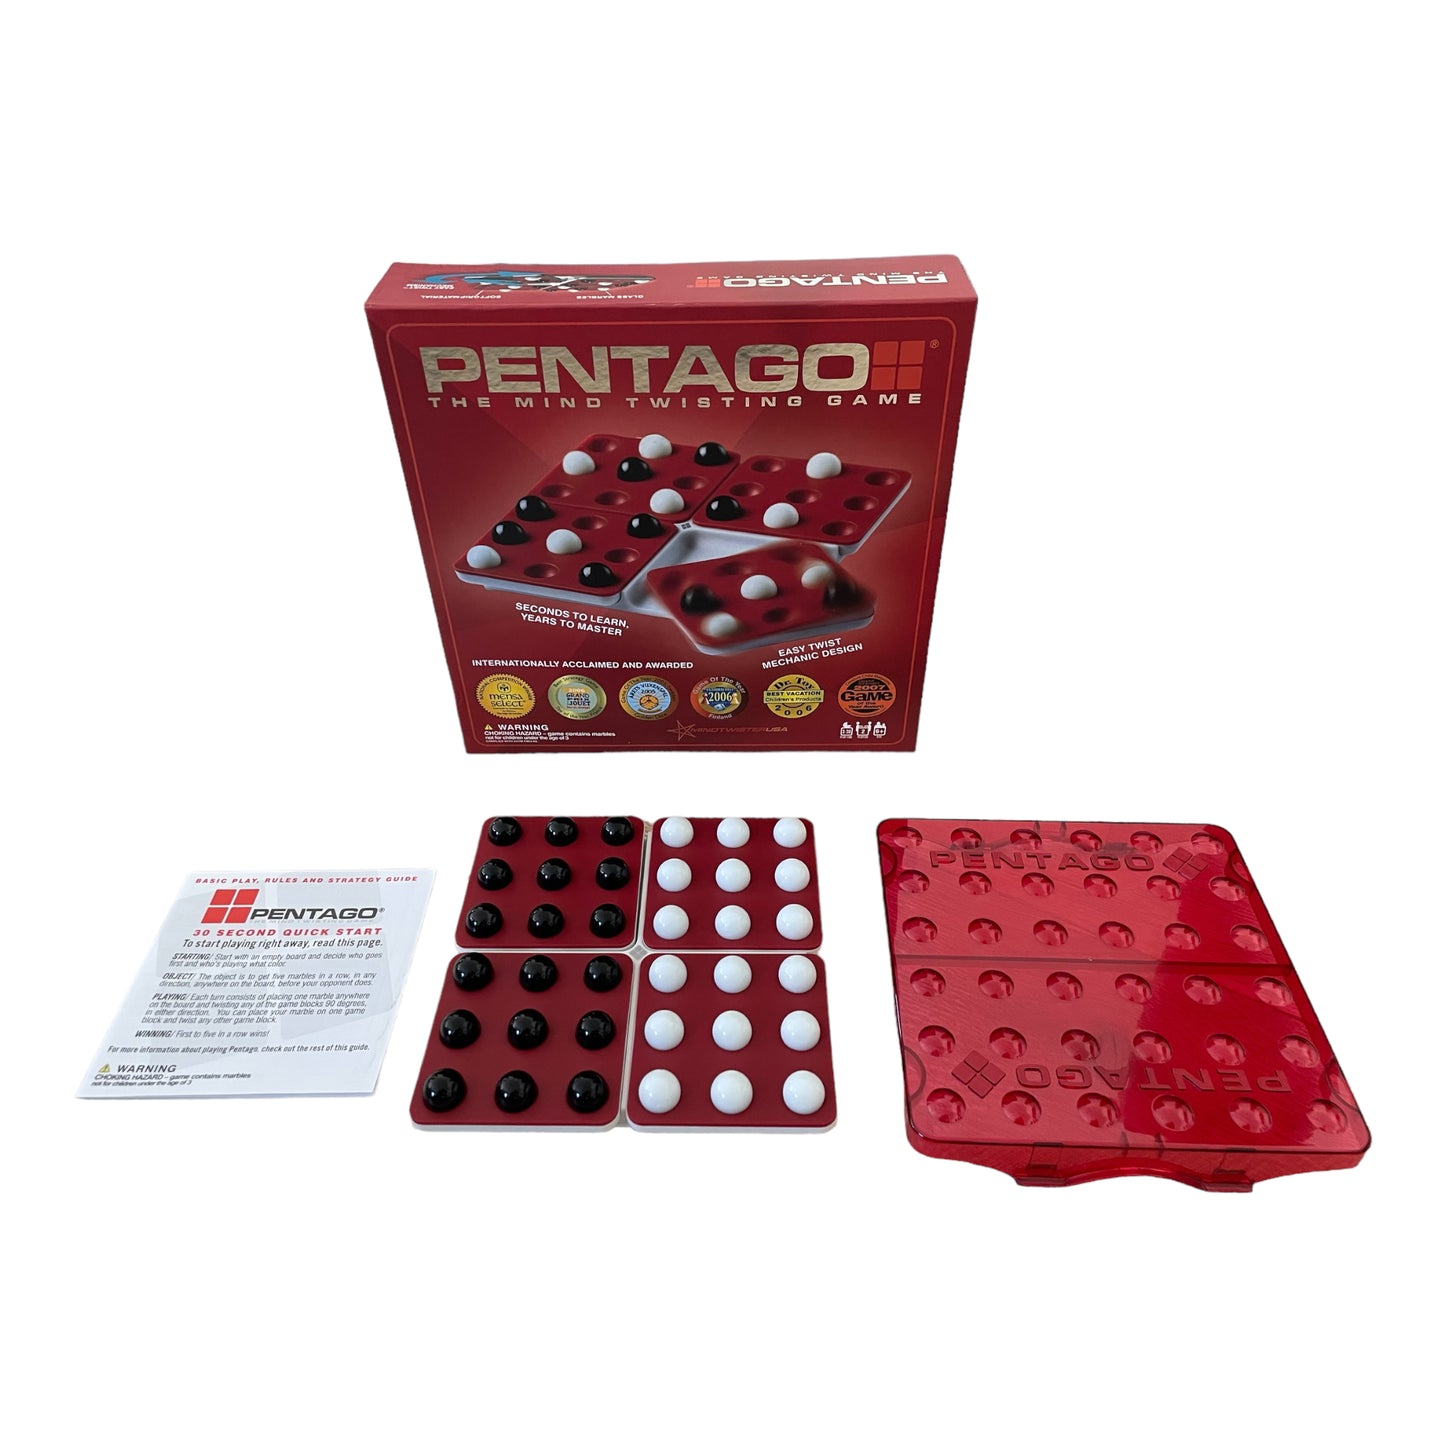 Pentago, the mind twisting game.